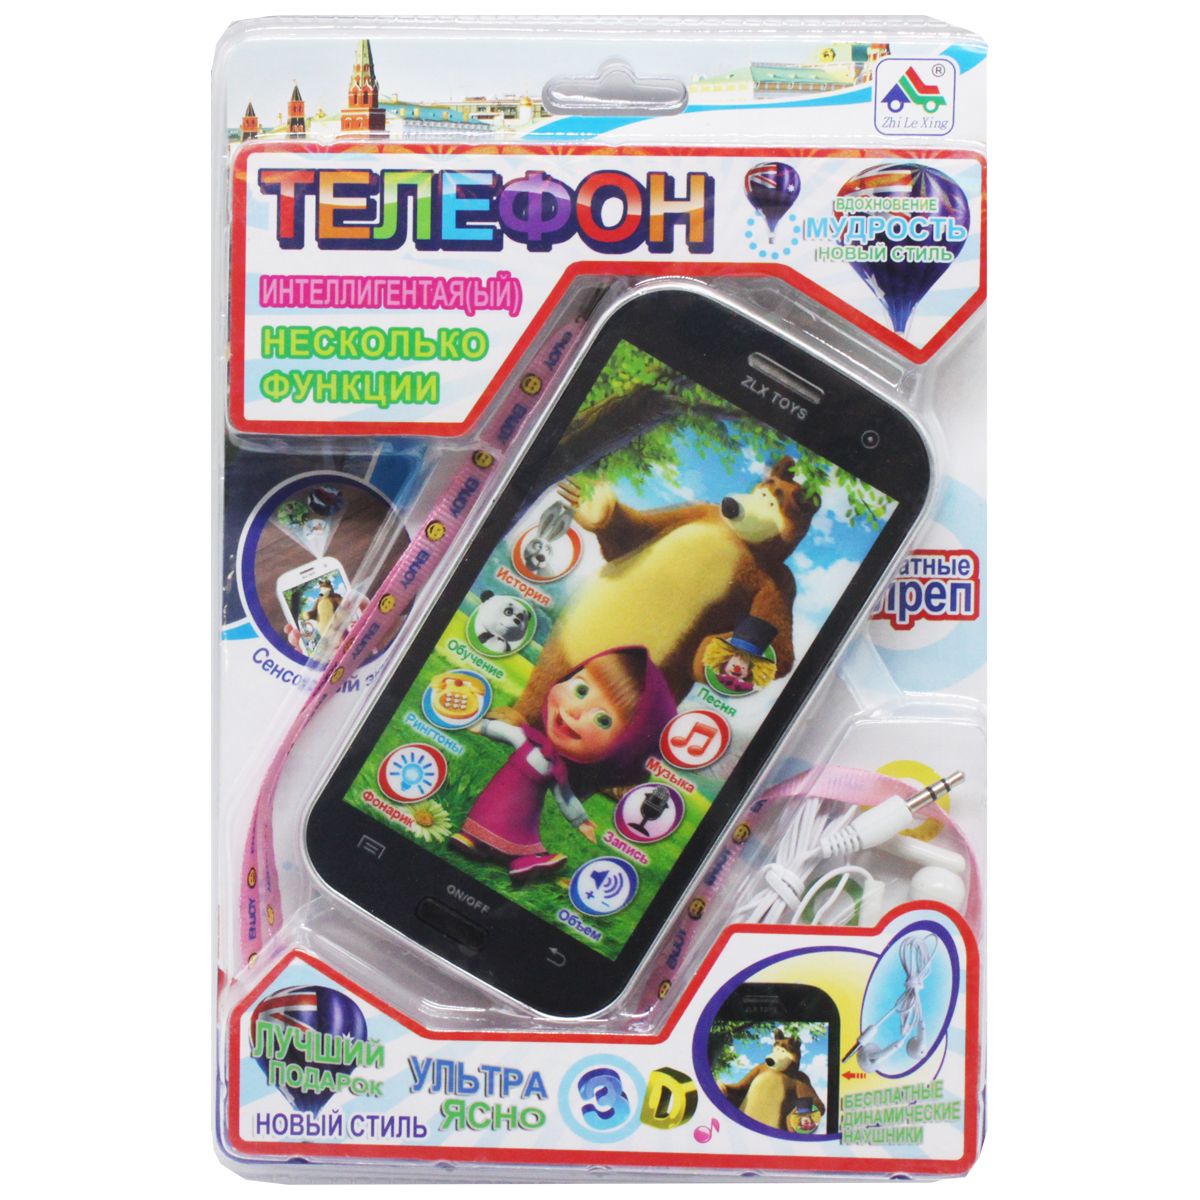 Навчальна іграшка "Телефон"